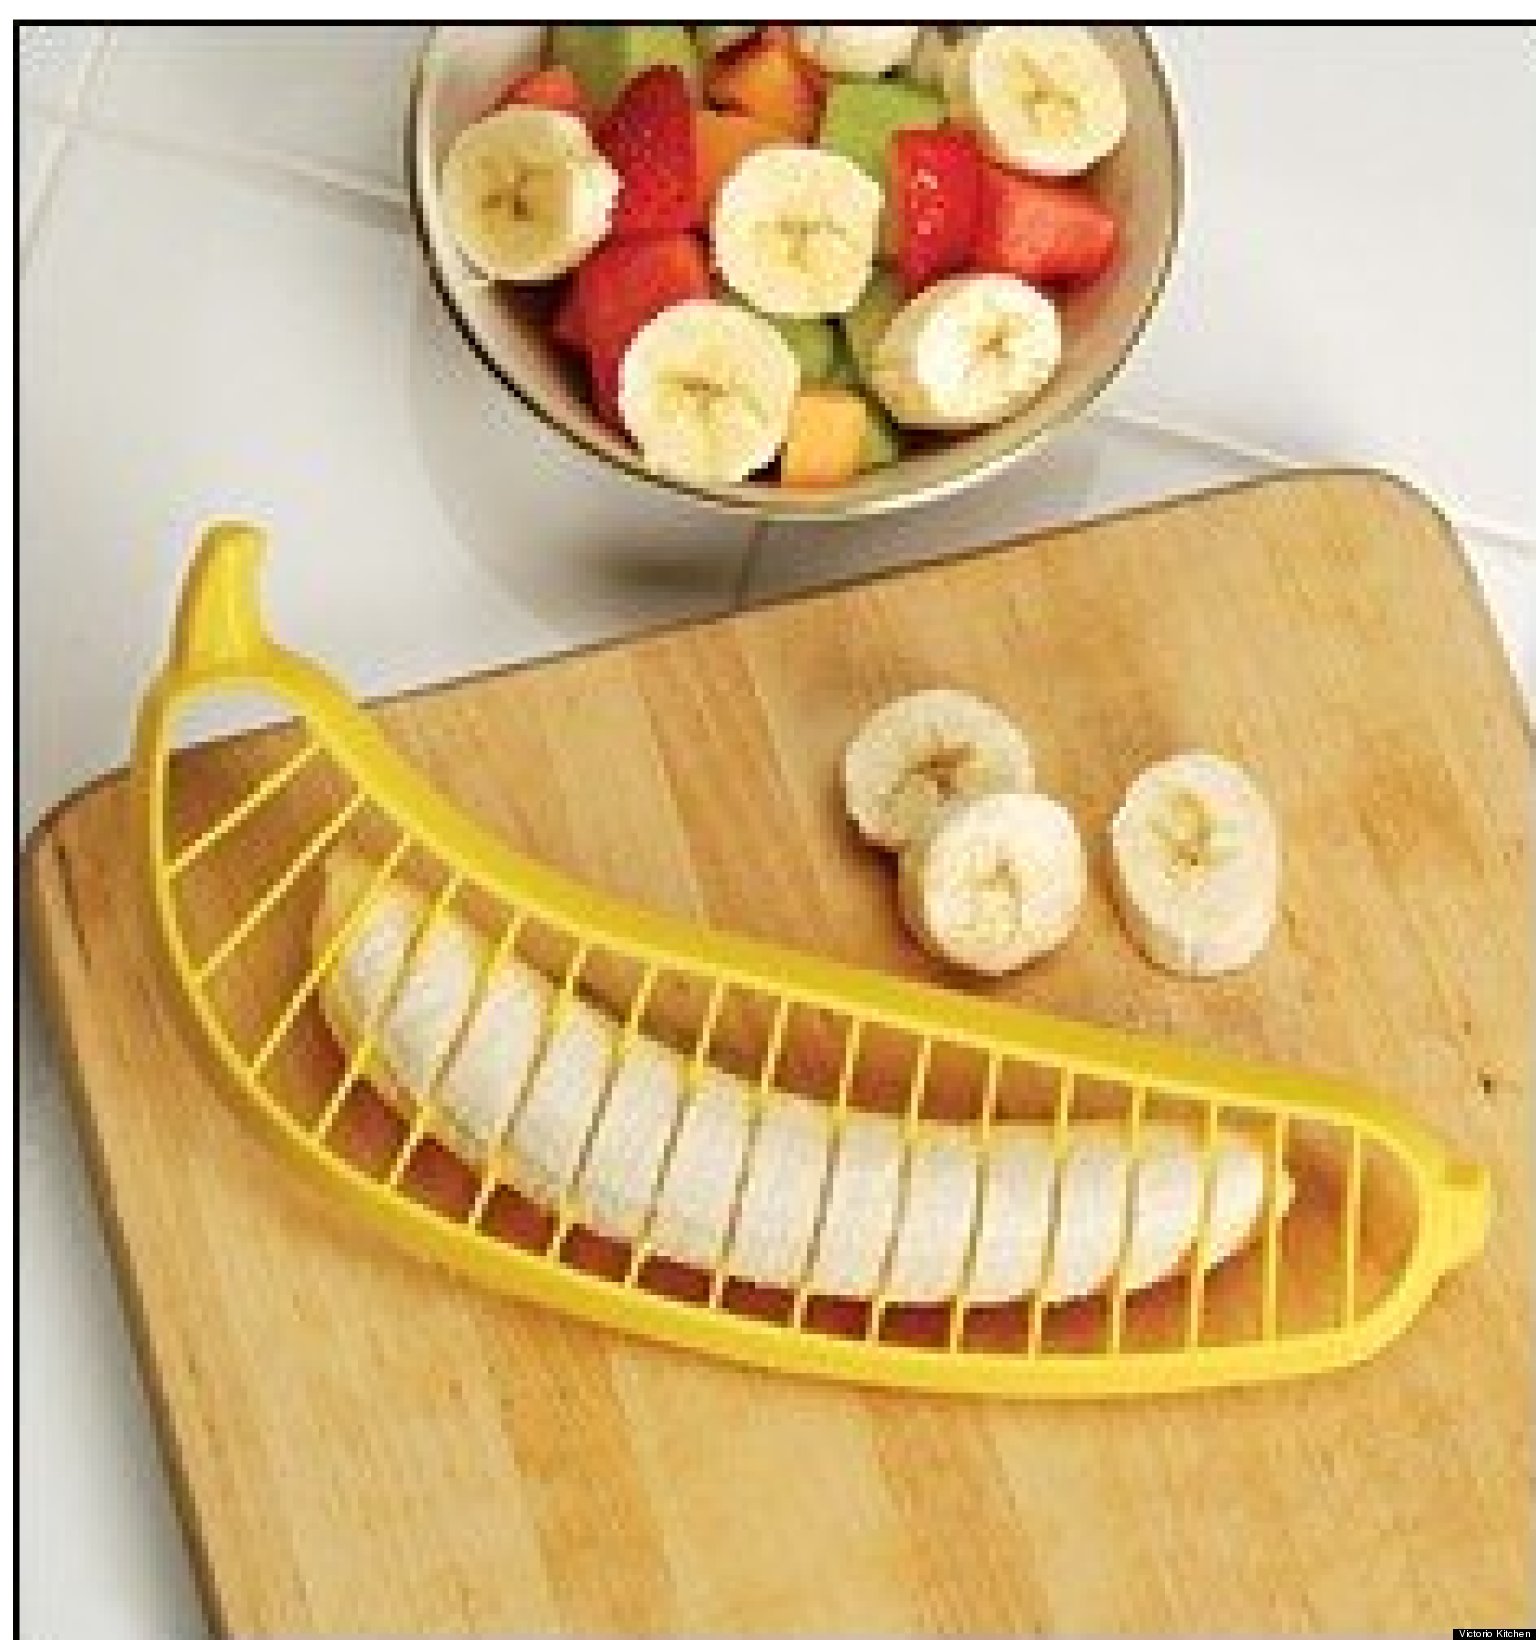 banana slicer amazon uk